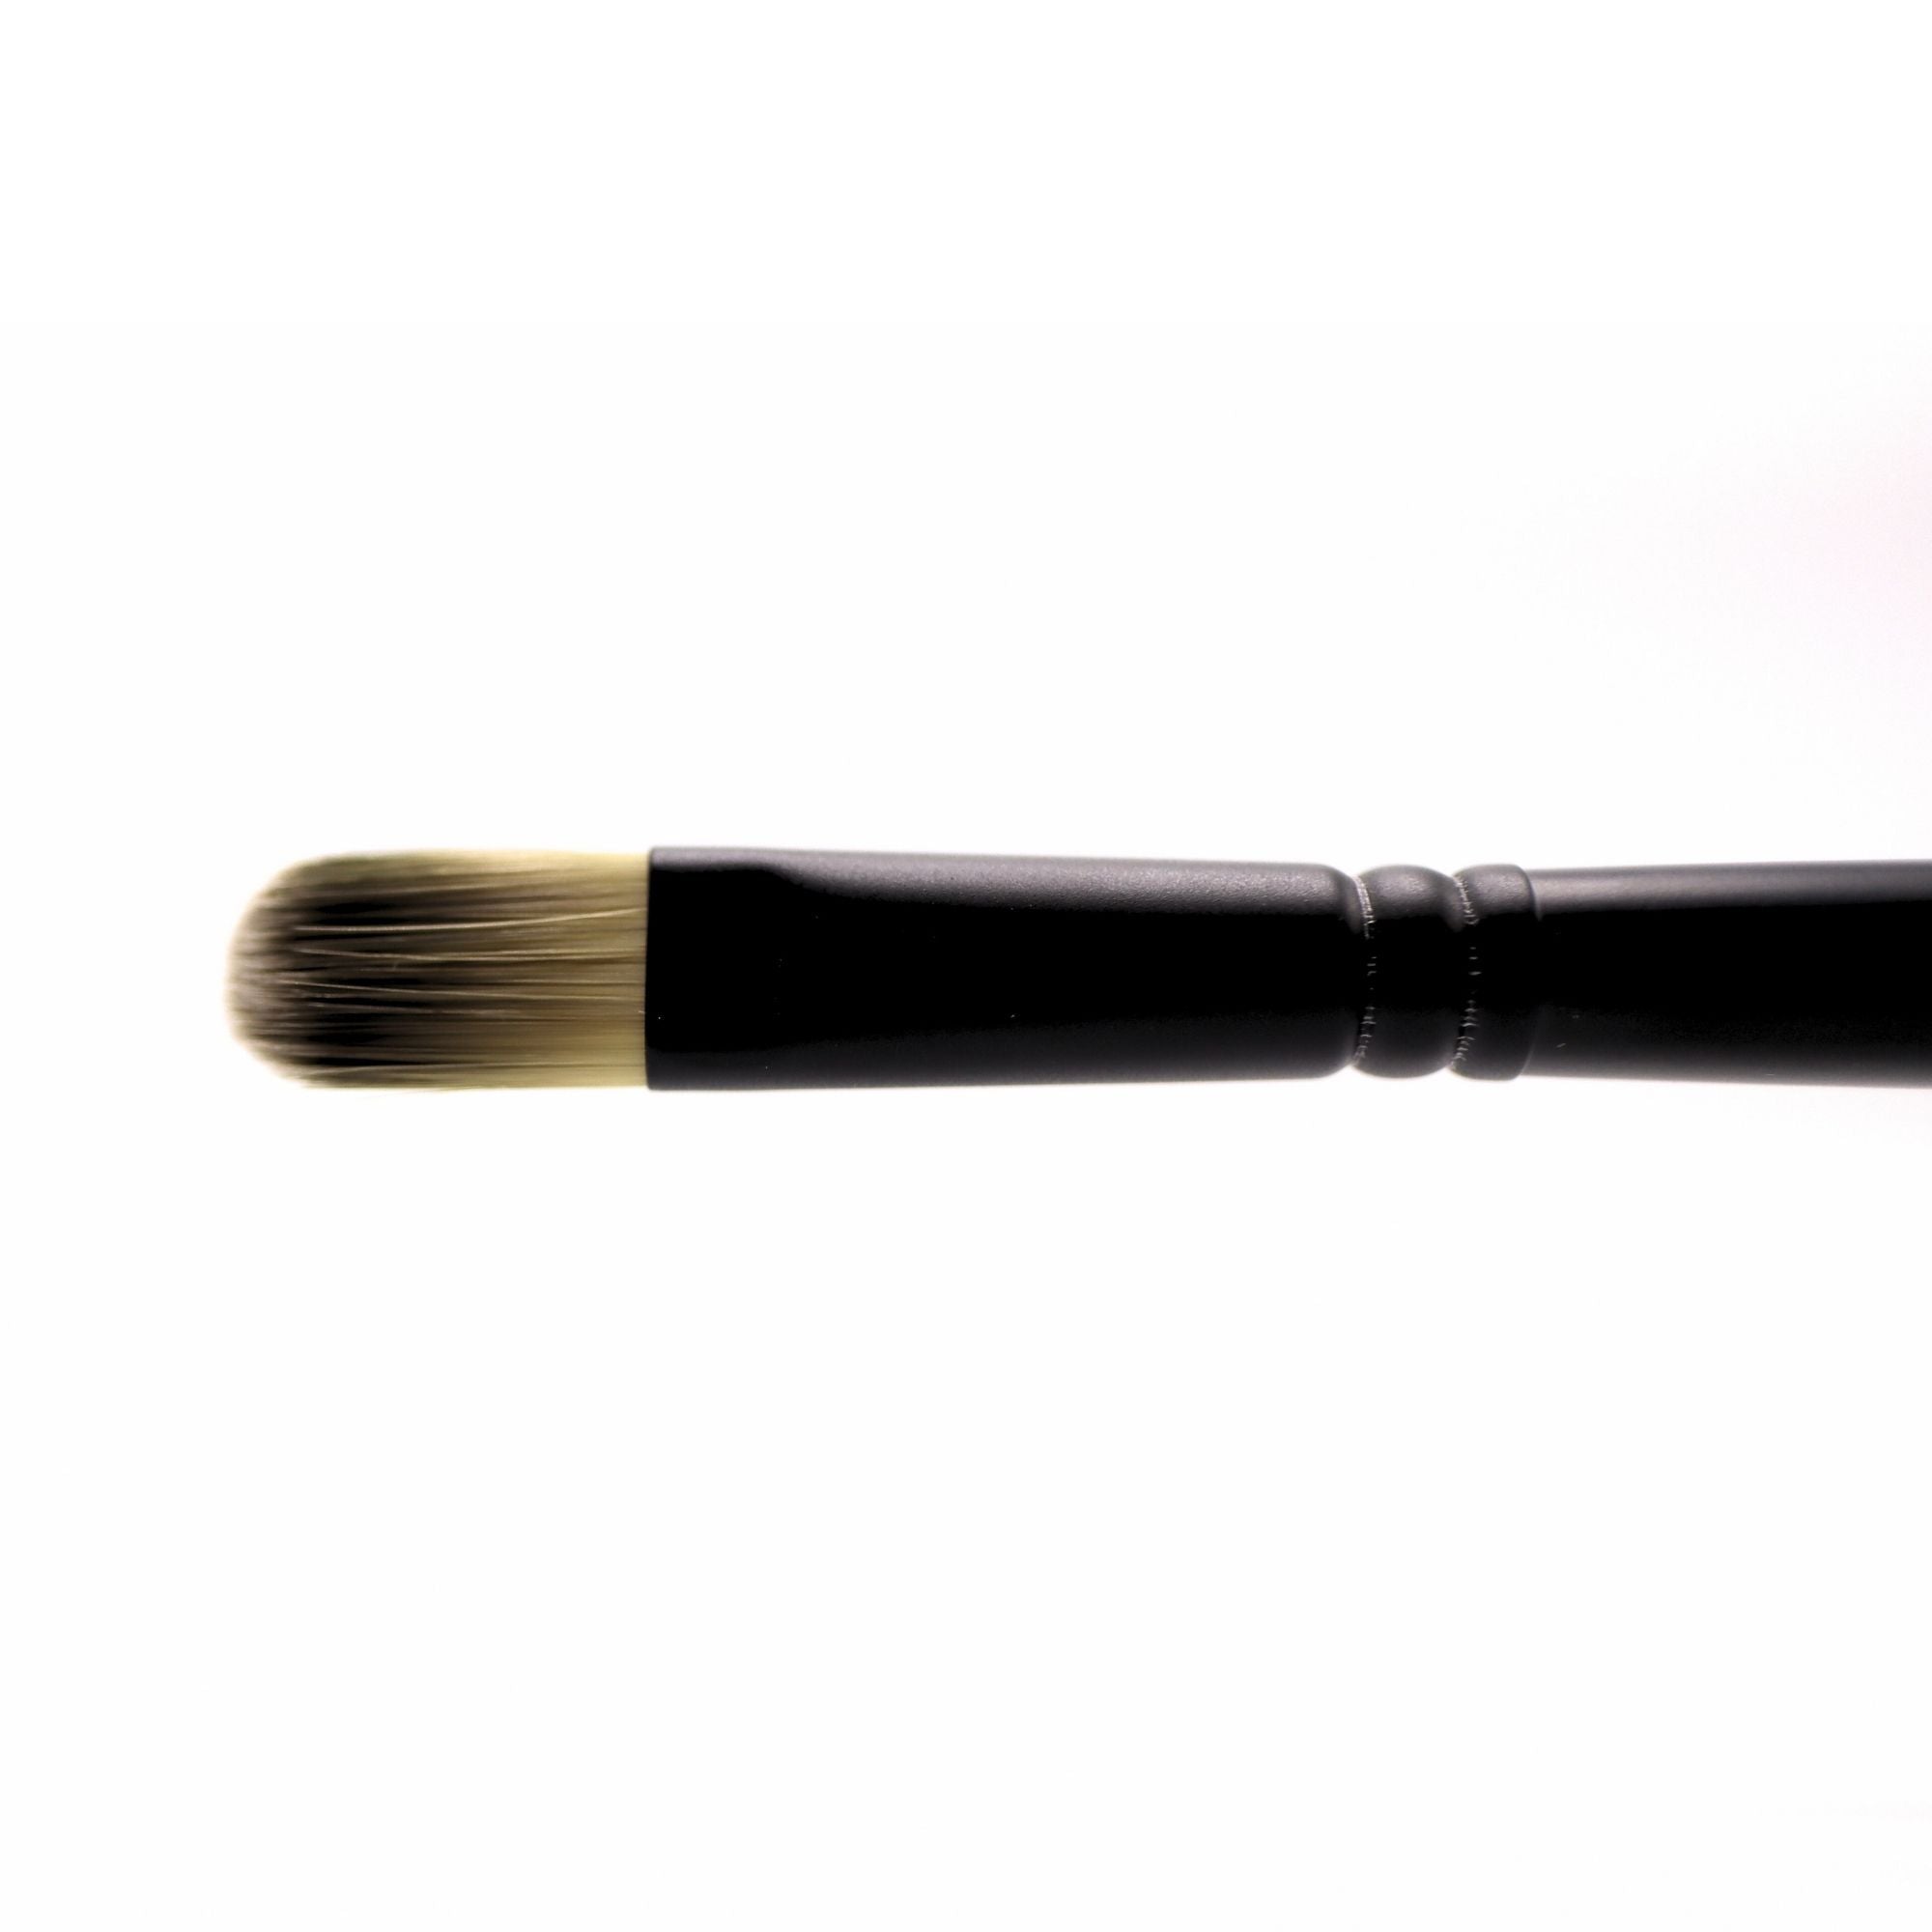 Tauhaus P-17 Detail Foundation Brush, Pro Series - Fude Beauty, Japanese Makeup Brushes